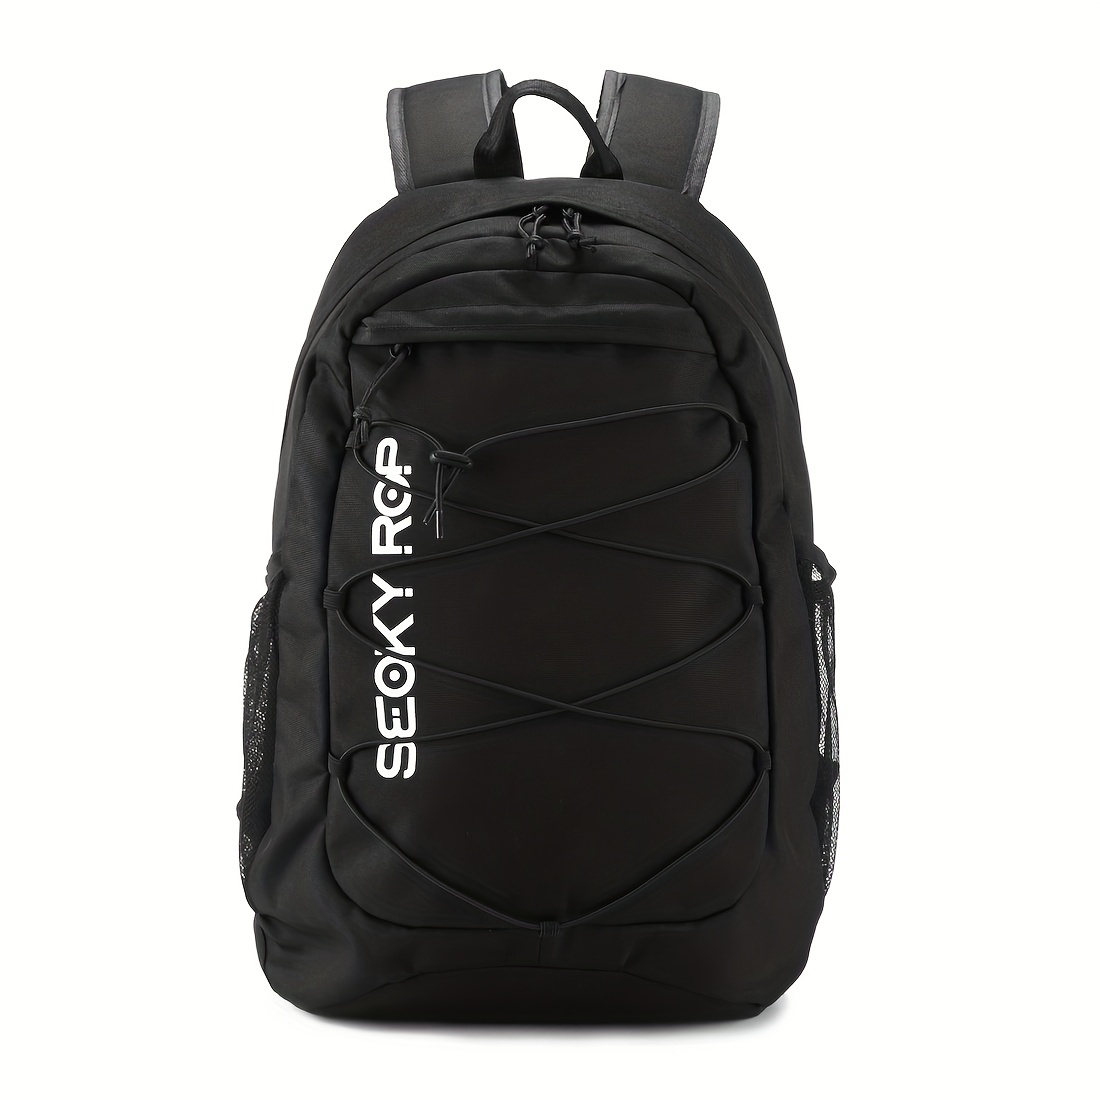 Seoky Rop Sling Bag Crossbody Backpack for Men Women Small Chest Shoulder  Bag for Travel Hiking Daypack Red